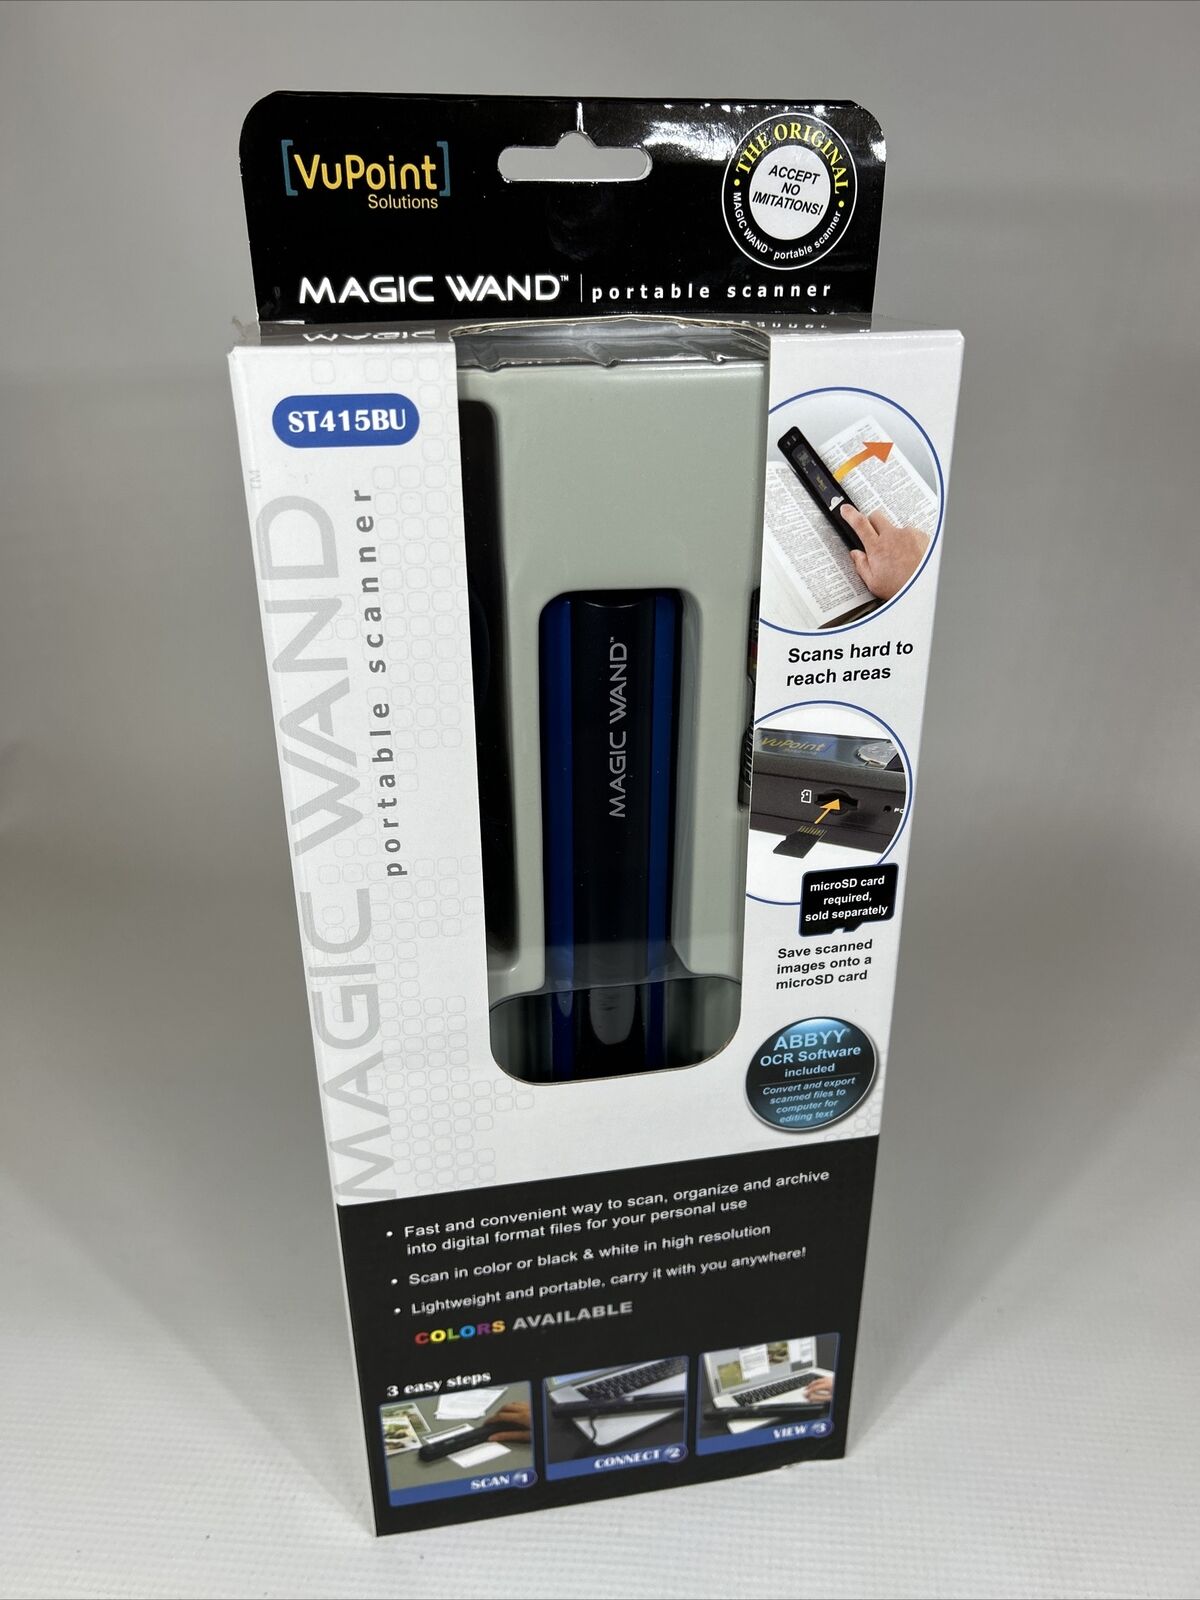 Handheld Portable Scanner Magic Wand BLUE Receipts Recipes VuPoint PDS-ST415BU